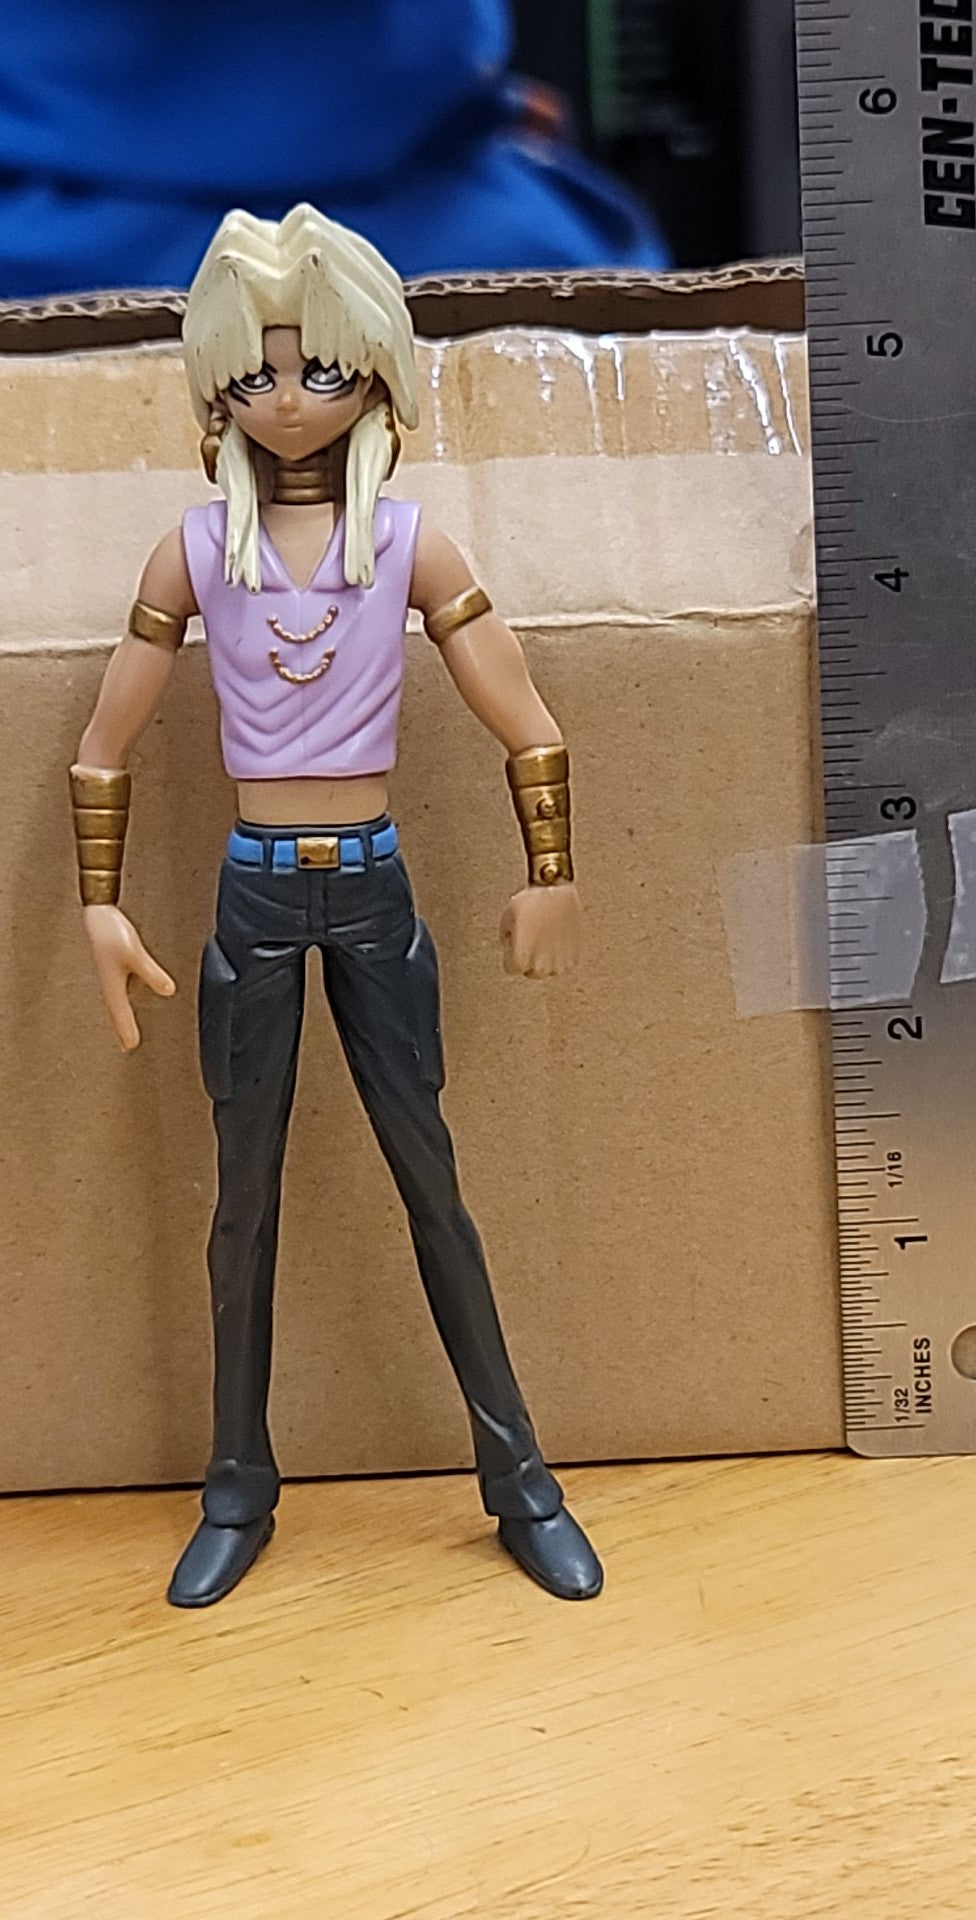 5" inch figure